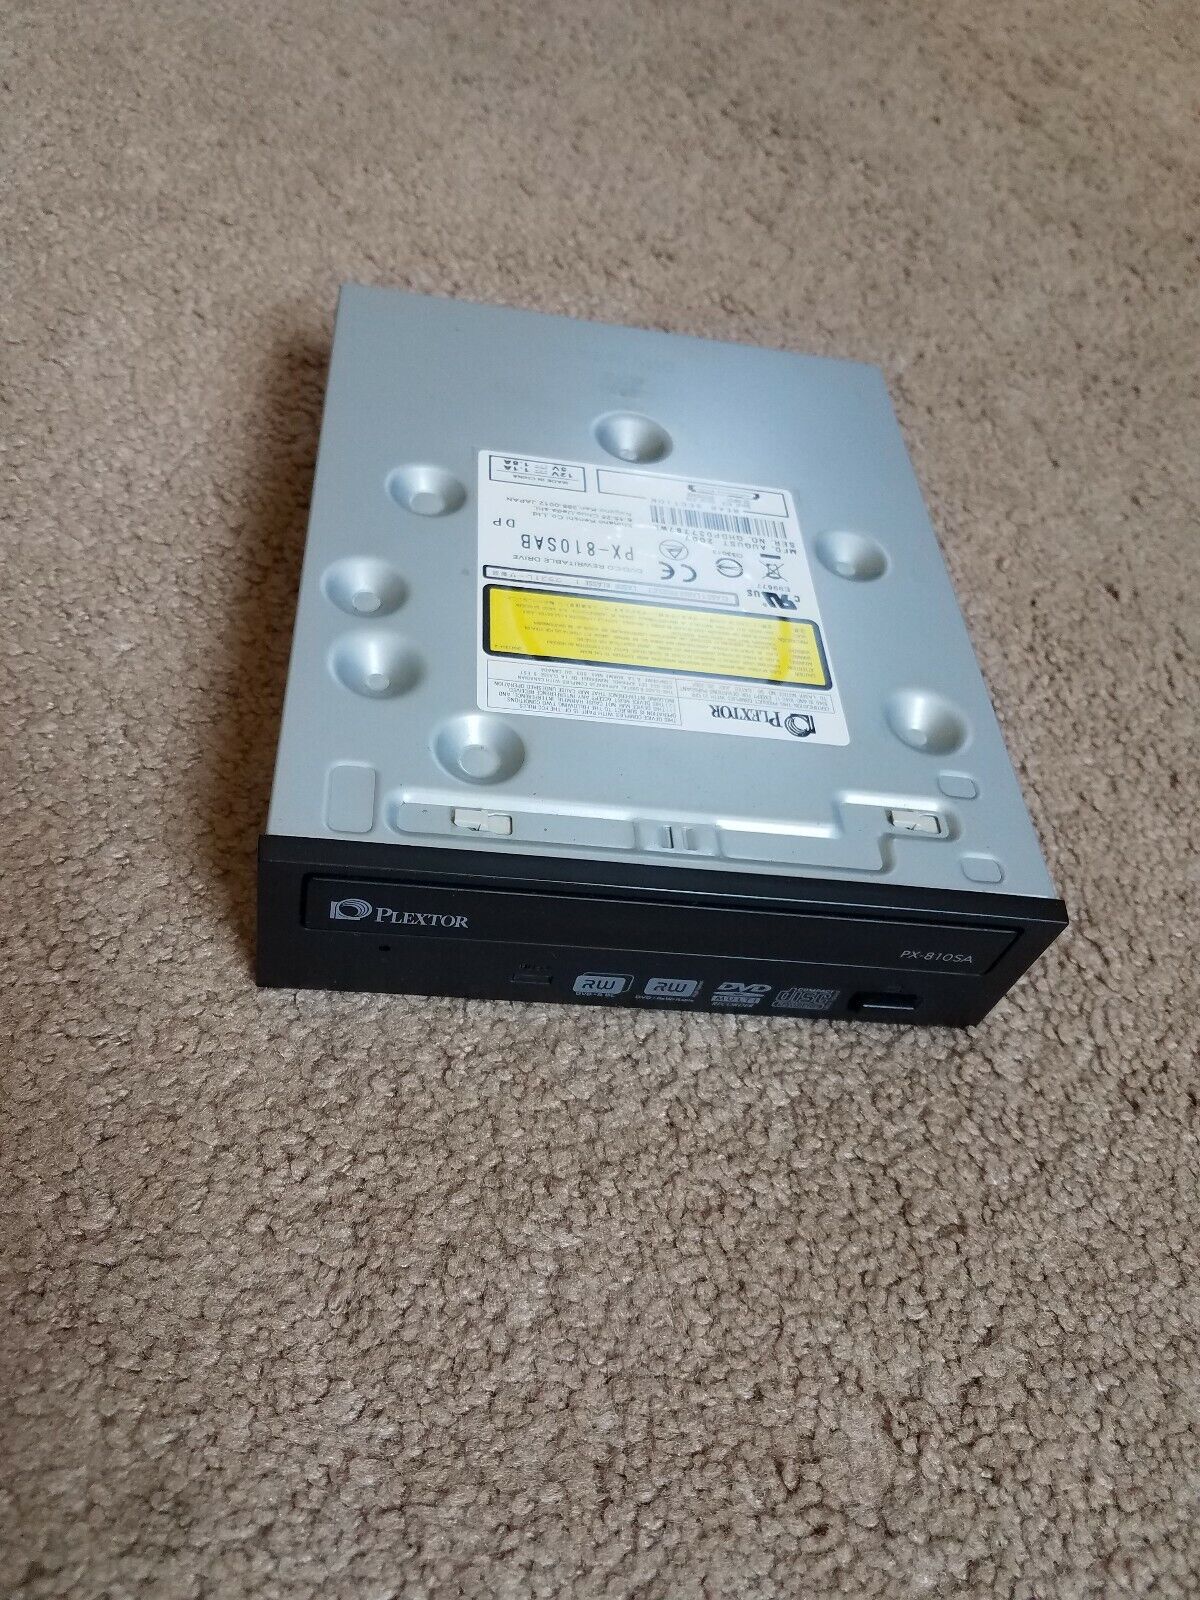 PLEXTOR PX-810SA 18x Super Multi DVD/CD Drive Burner Works Great USED